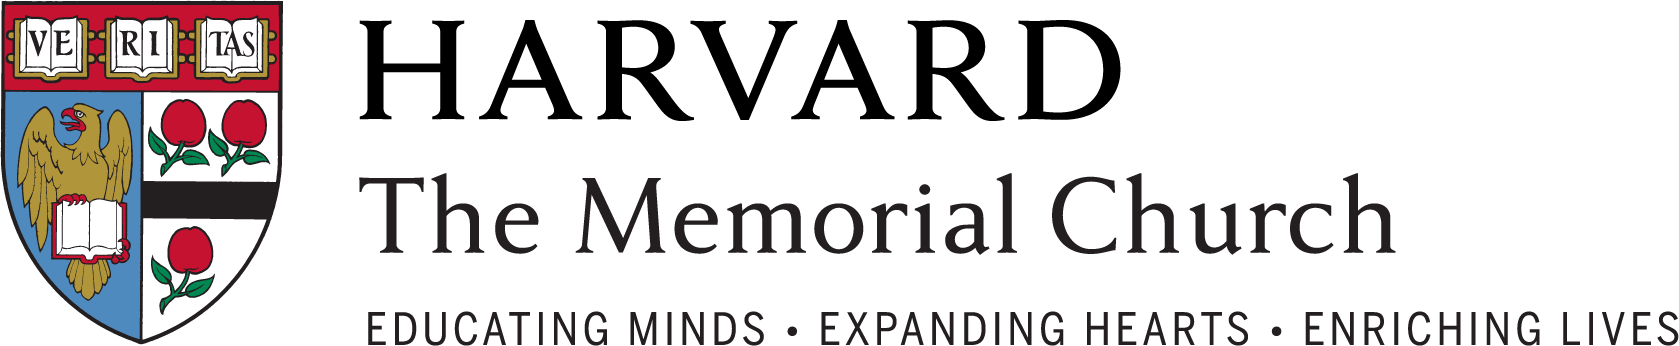 Harvard Memorial Church Logo